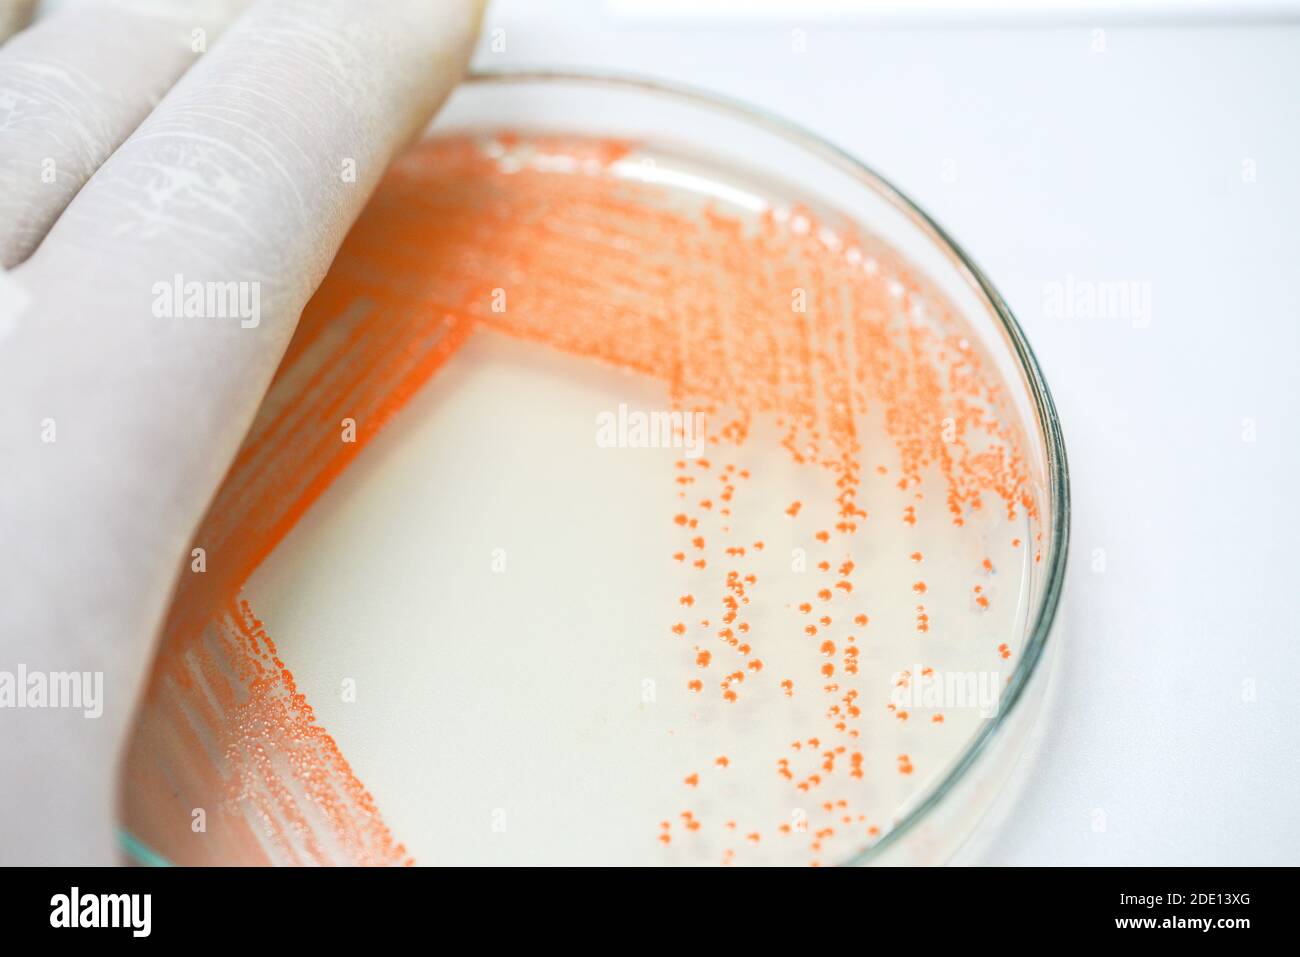 Colony of bacteria on culture medium Stock Photo